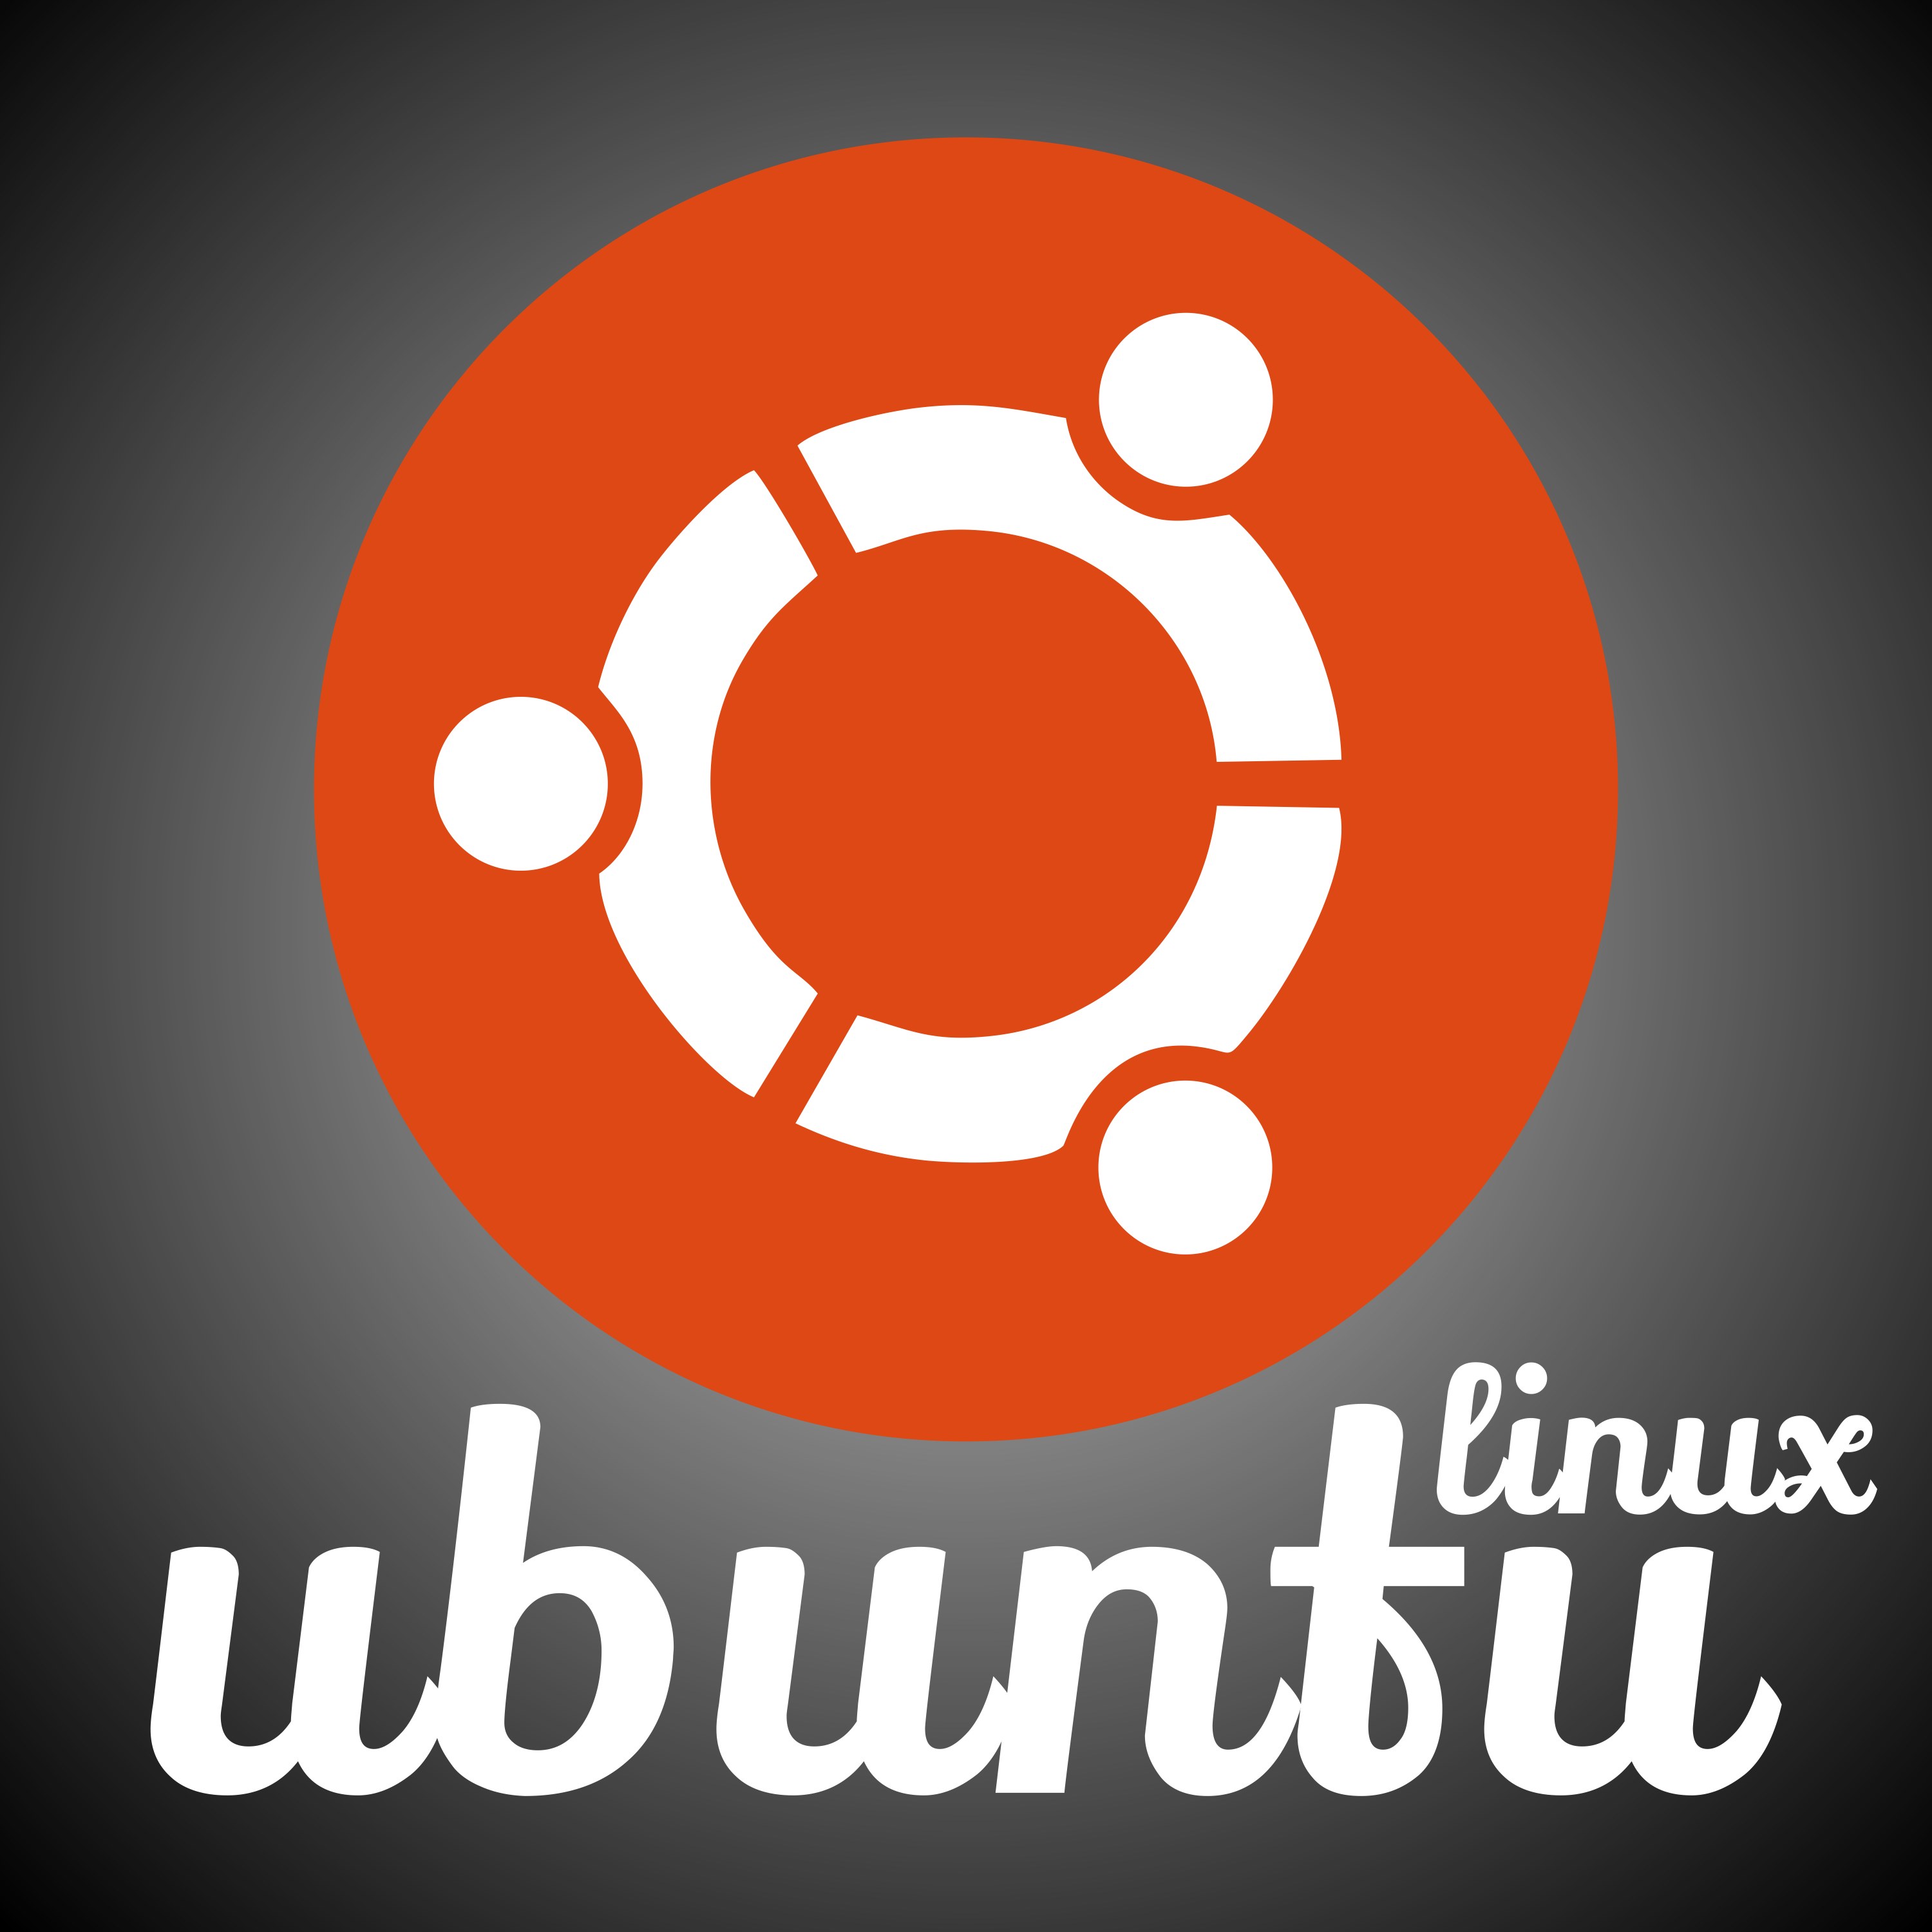 Ubuntu-Linux-Logo-Design-Black-Orange-White-Vedfolnir